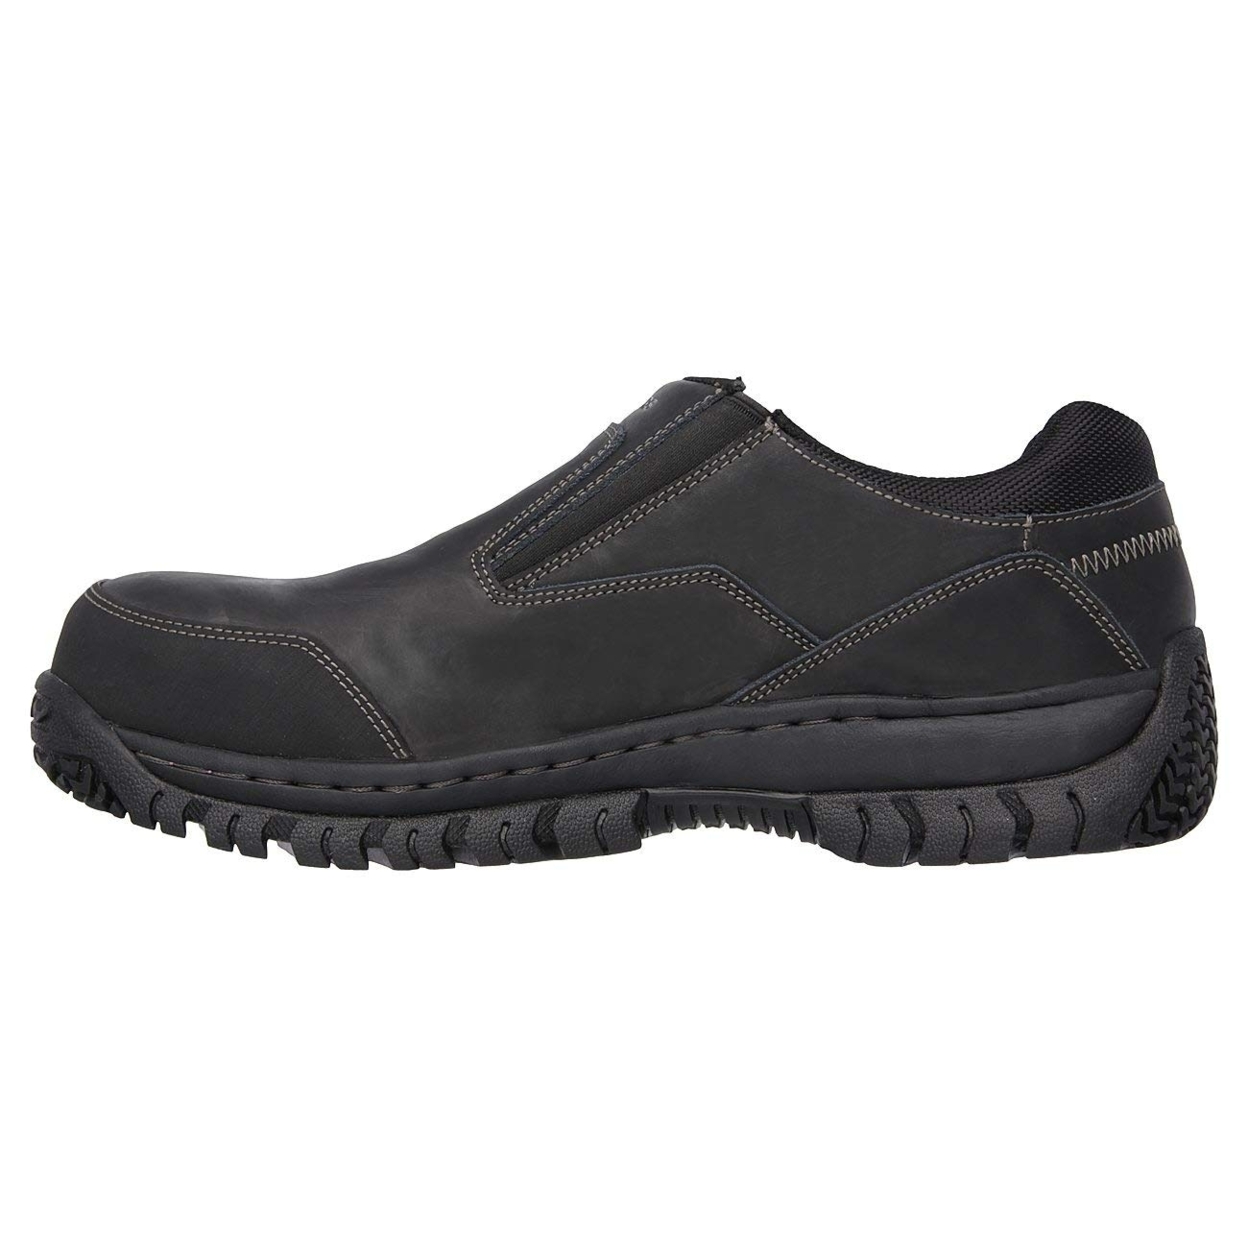 Skechers For Work Men's Hartan Steel Toe Slip-On Shoe Varies BLACK - BLACK, 10